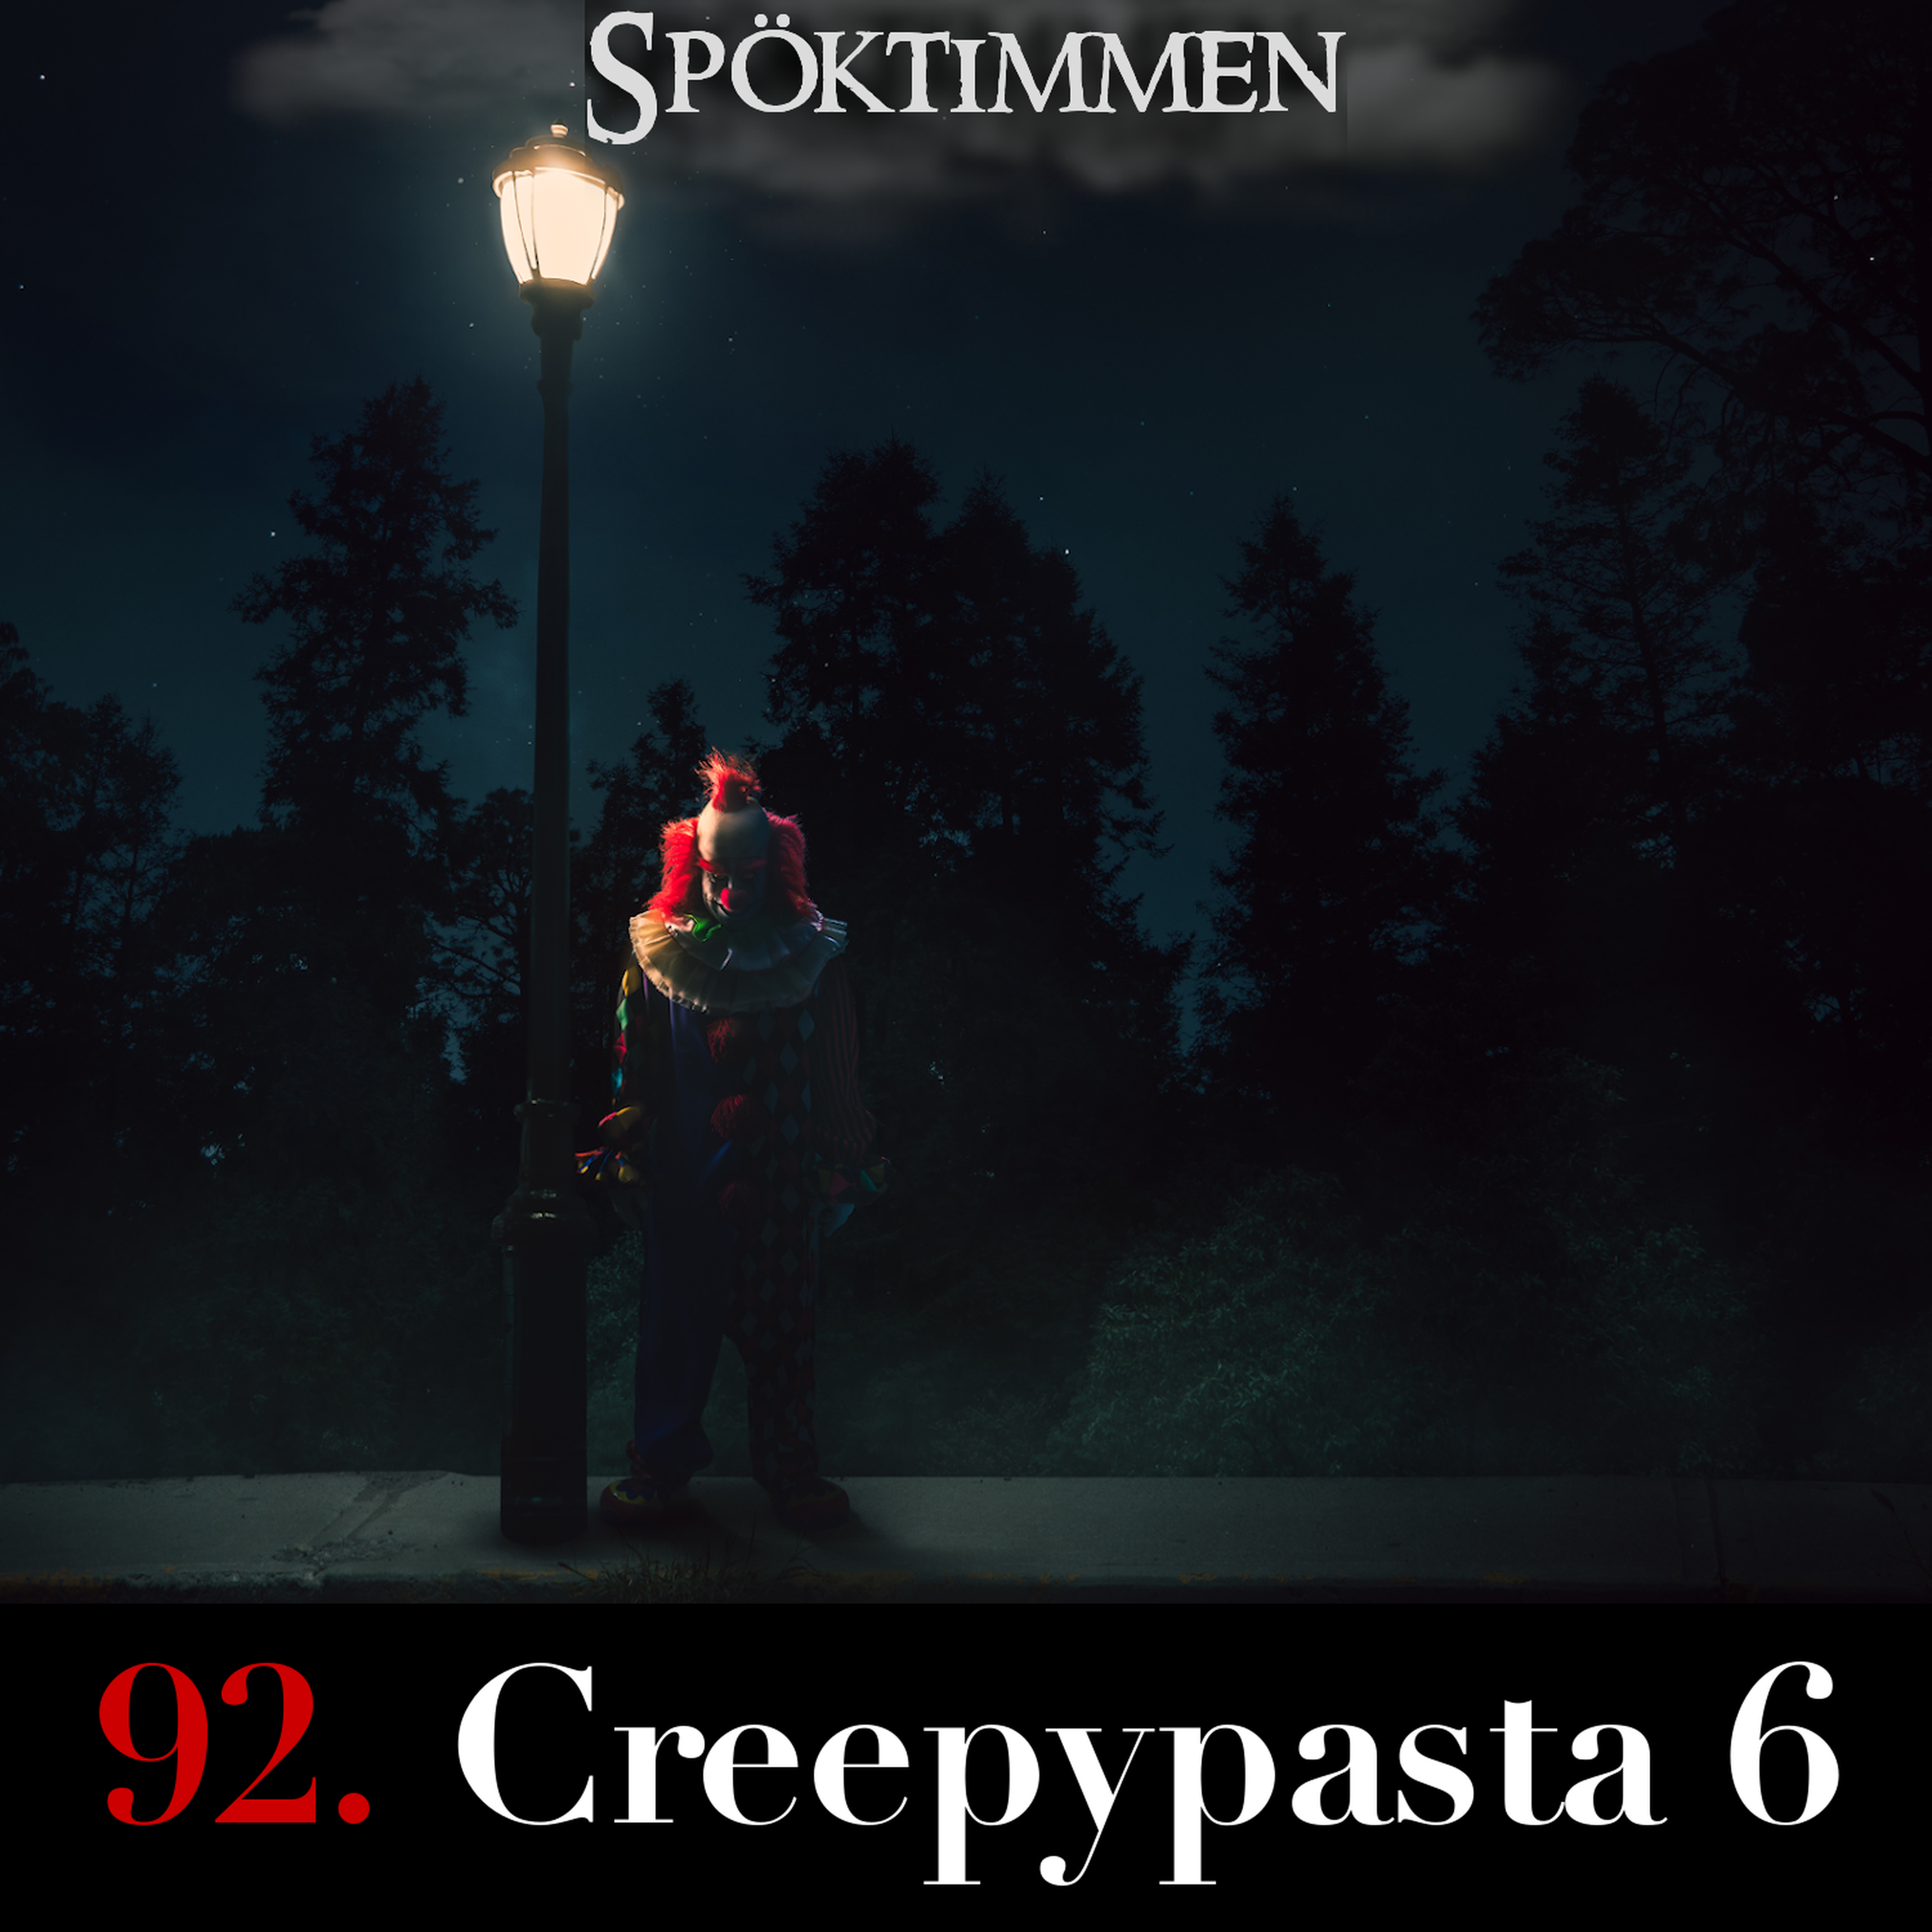 92. Creepypasta 6